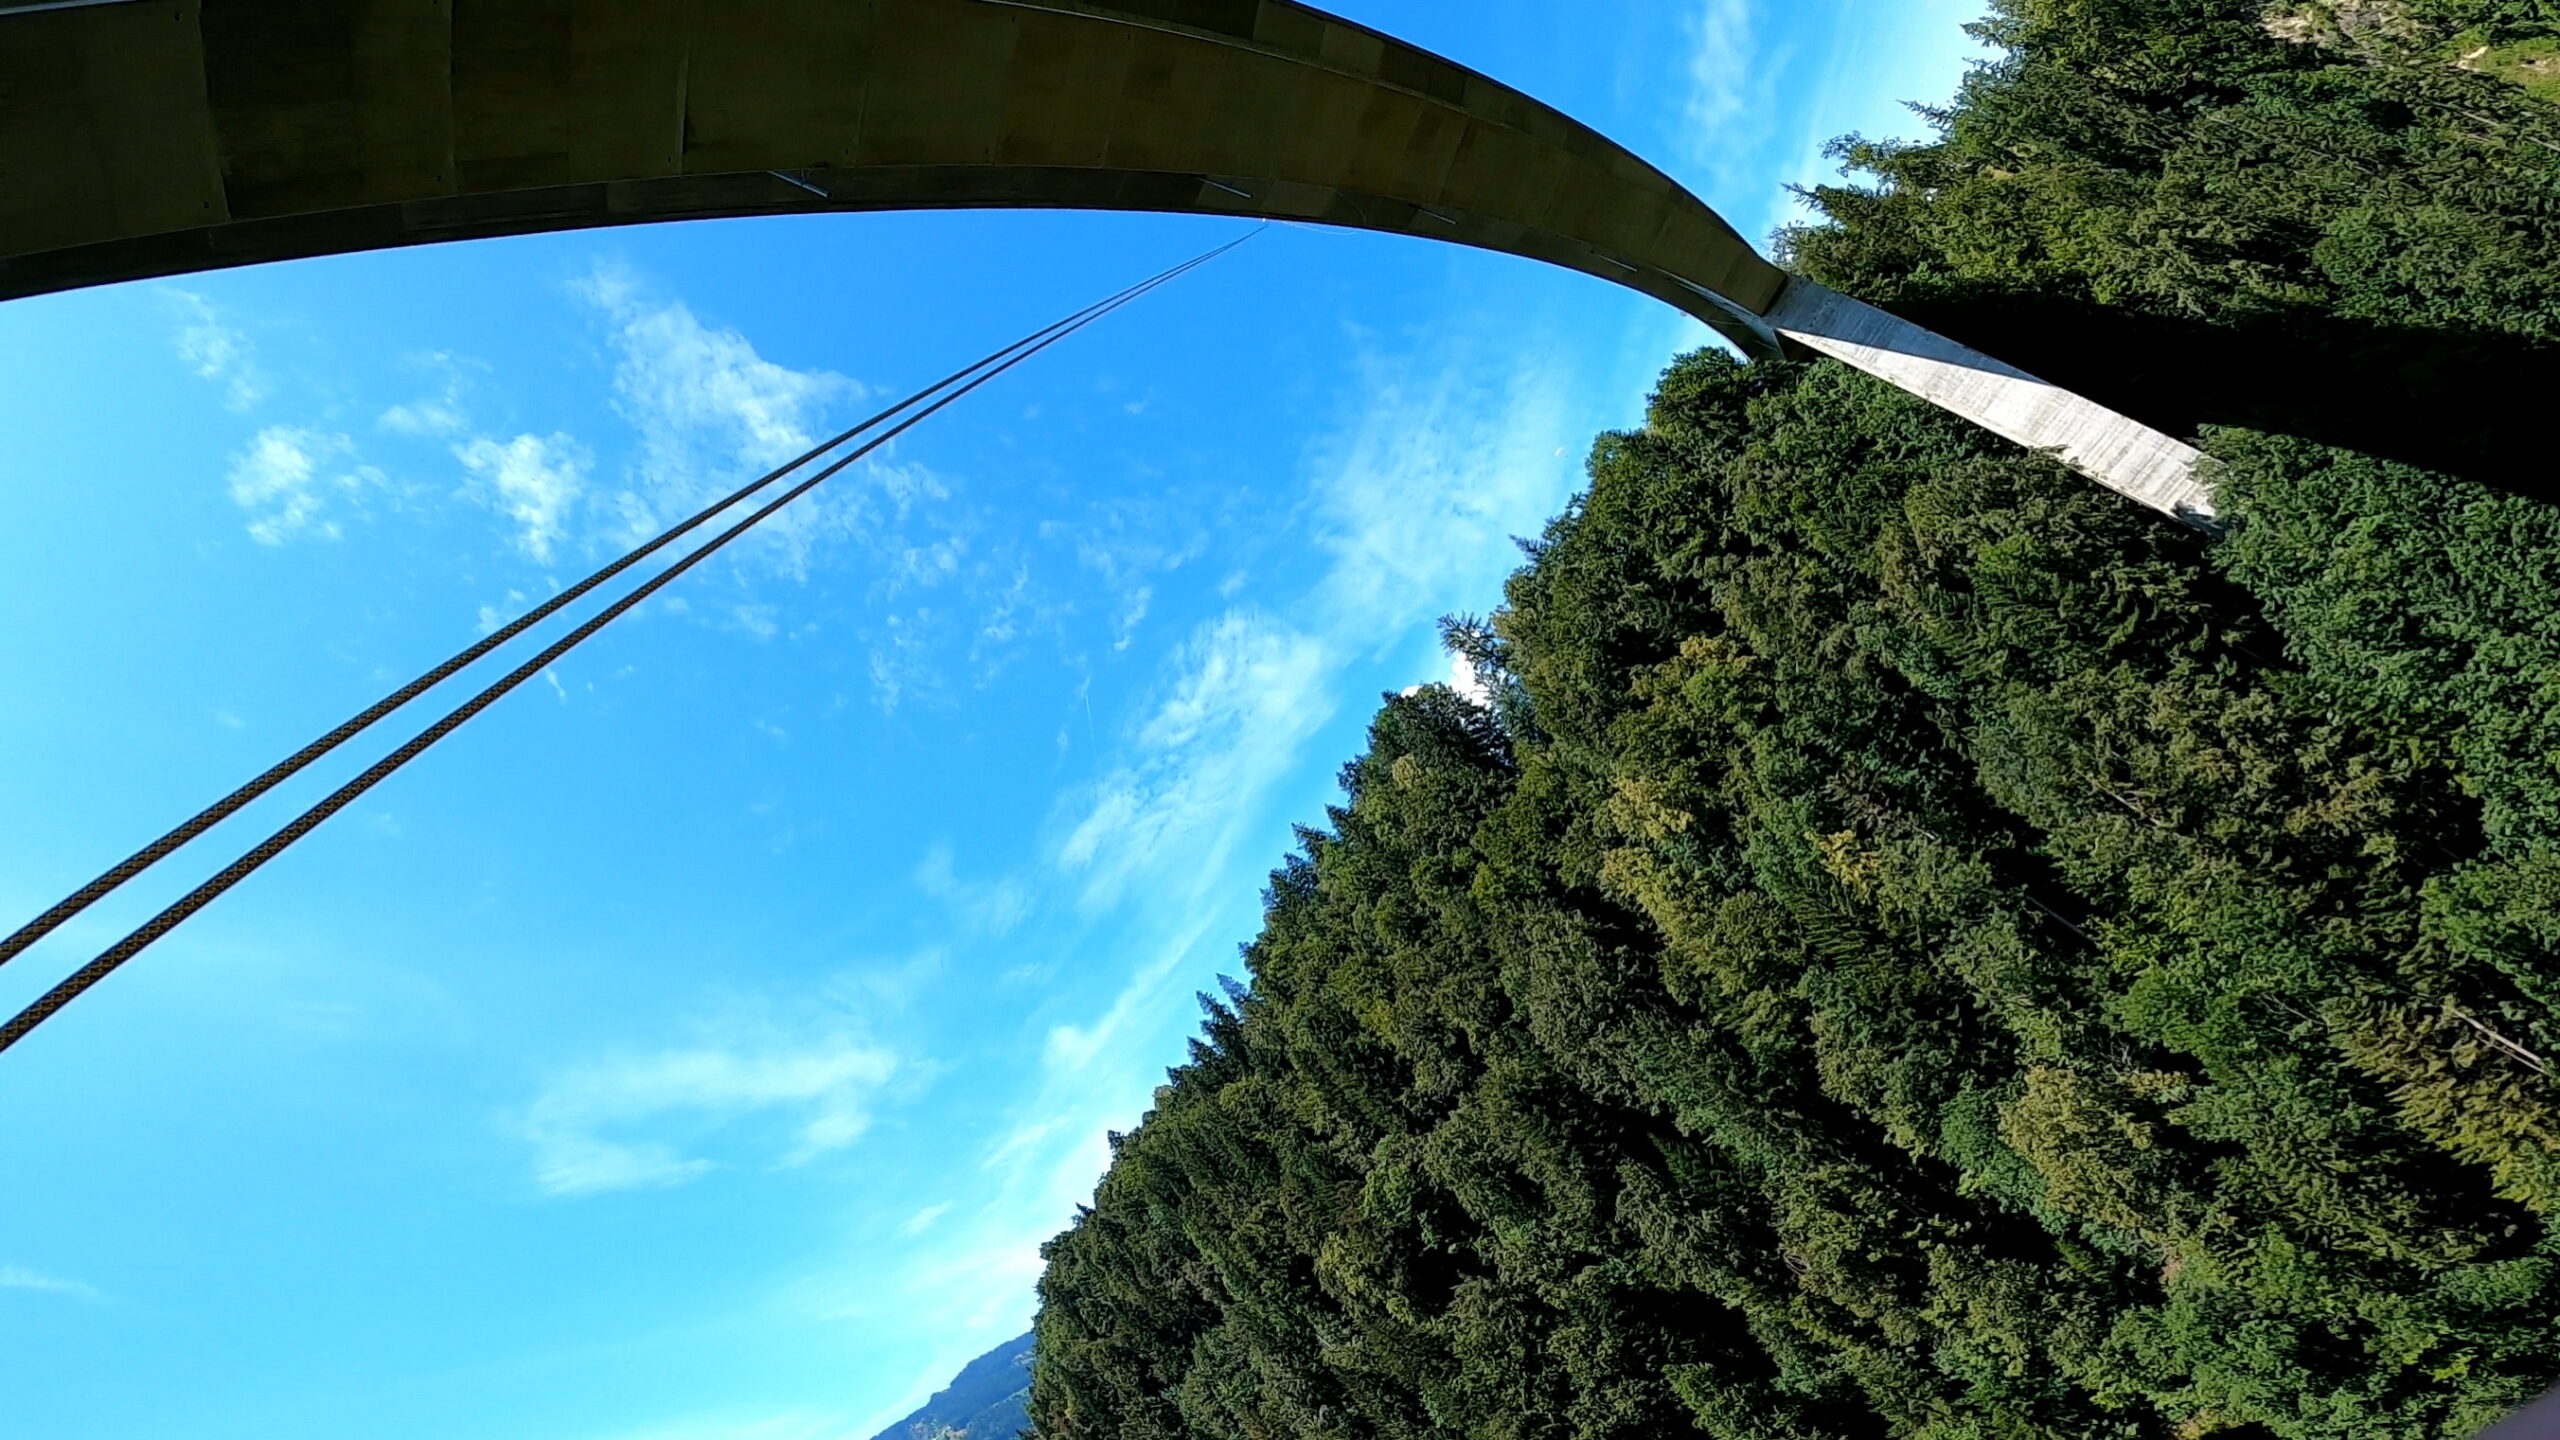 Giant Swing Lingenau, Austria.